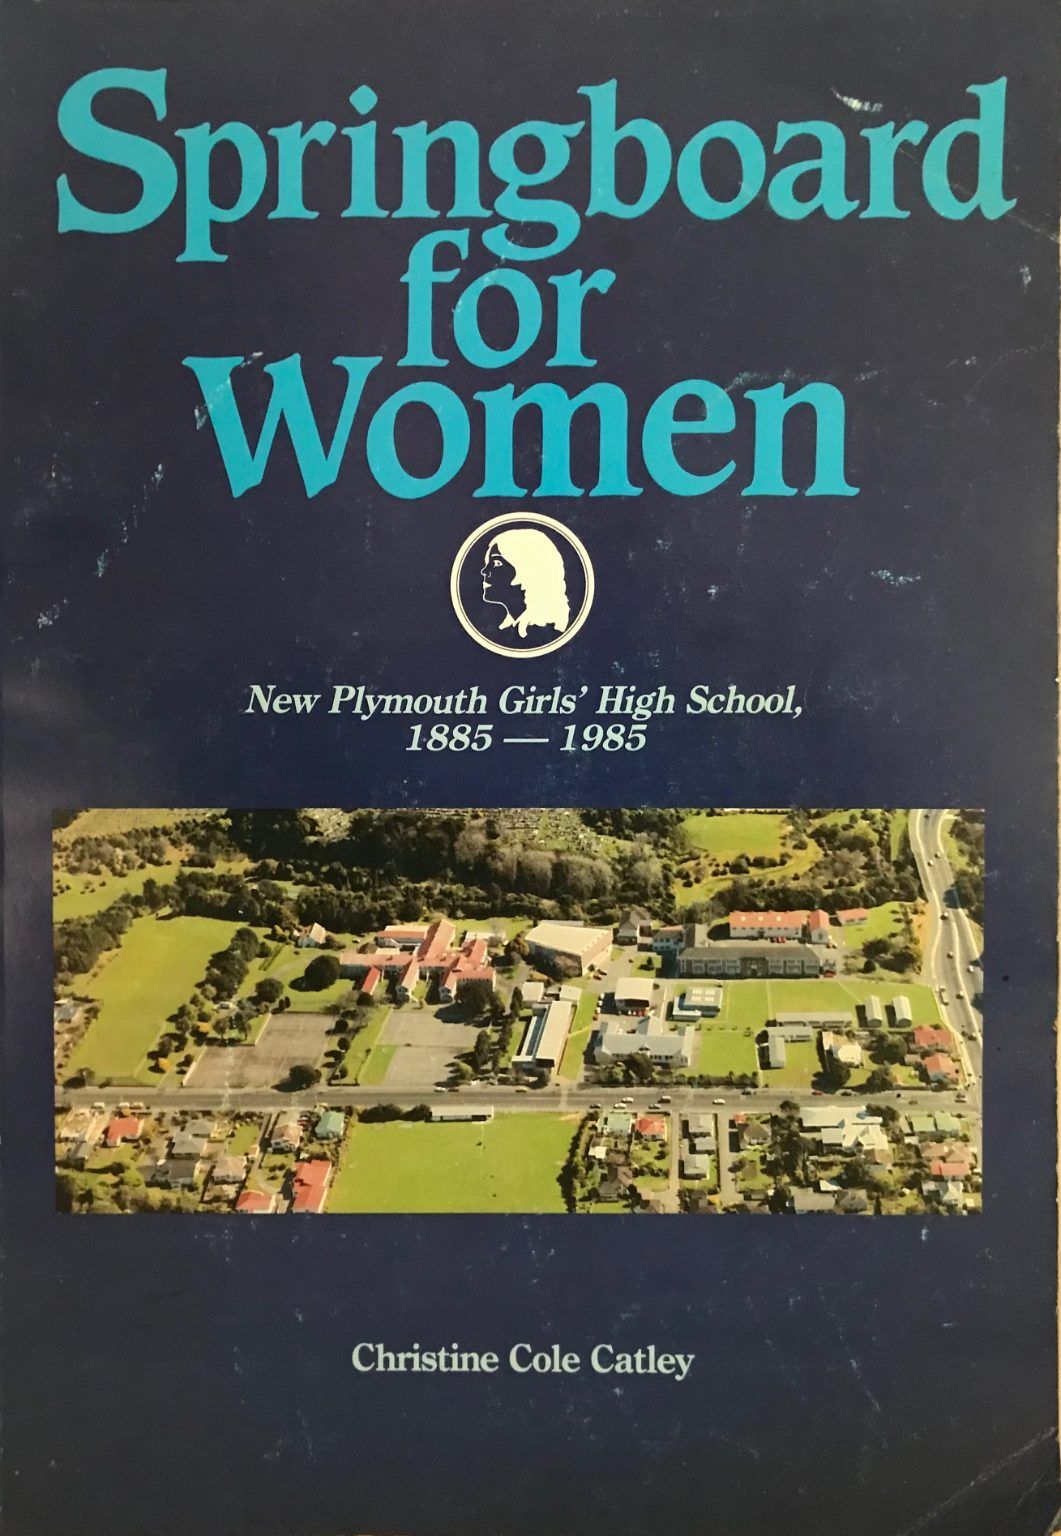 SPRINGBOARD FOR WOMEN: New Plymouth Girls' High School 1885-1985